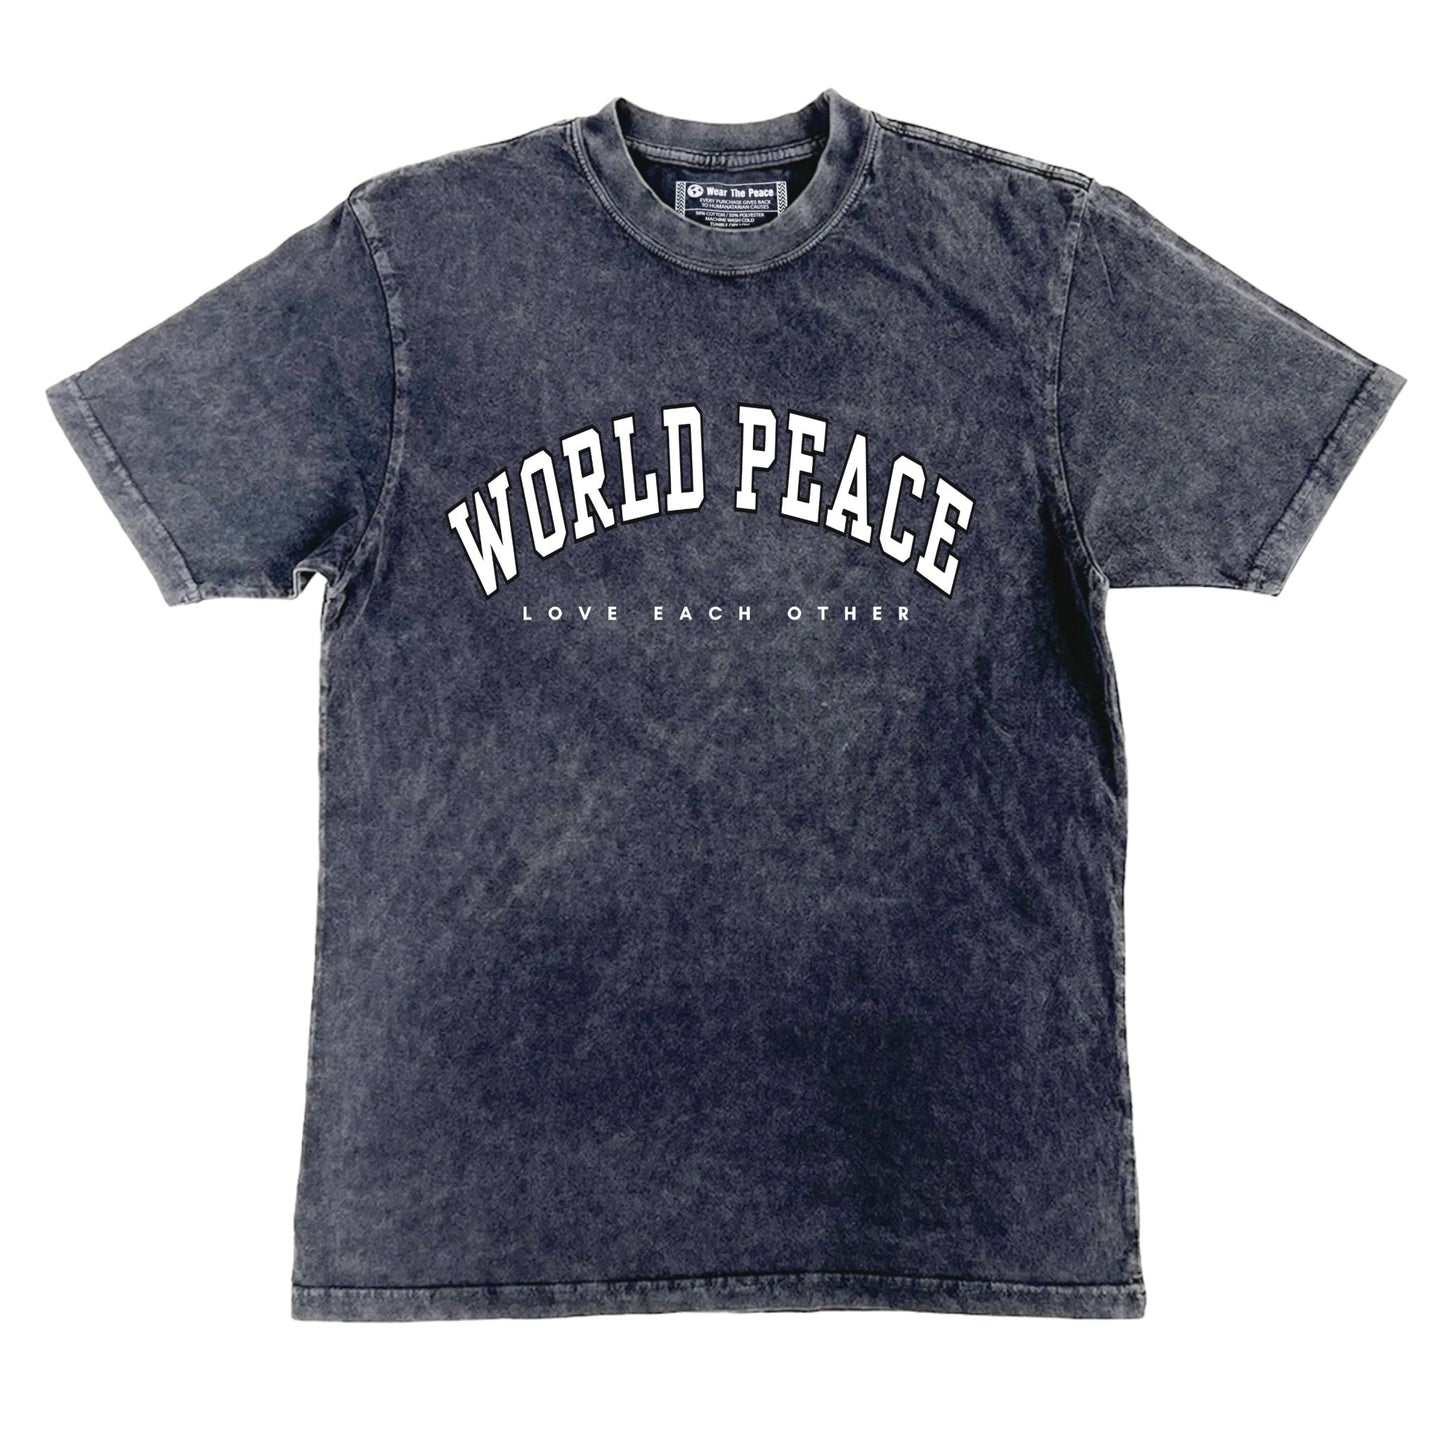 World Peace Vintage Tee Wear The Peace Short Sleeves Vintage Black S